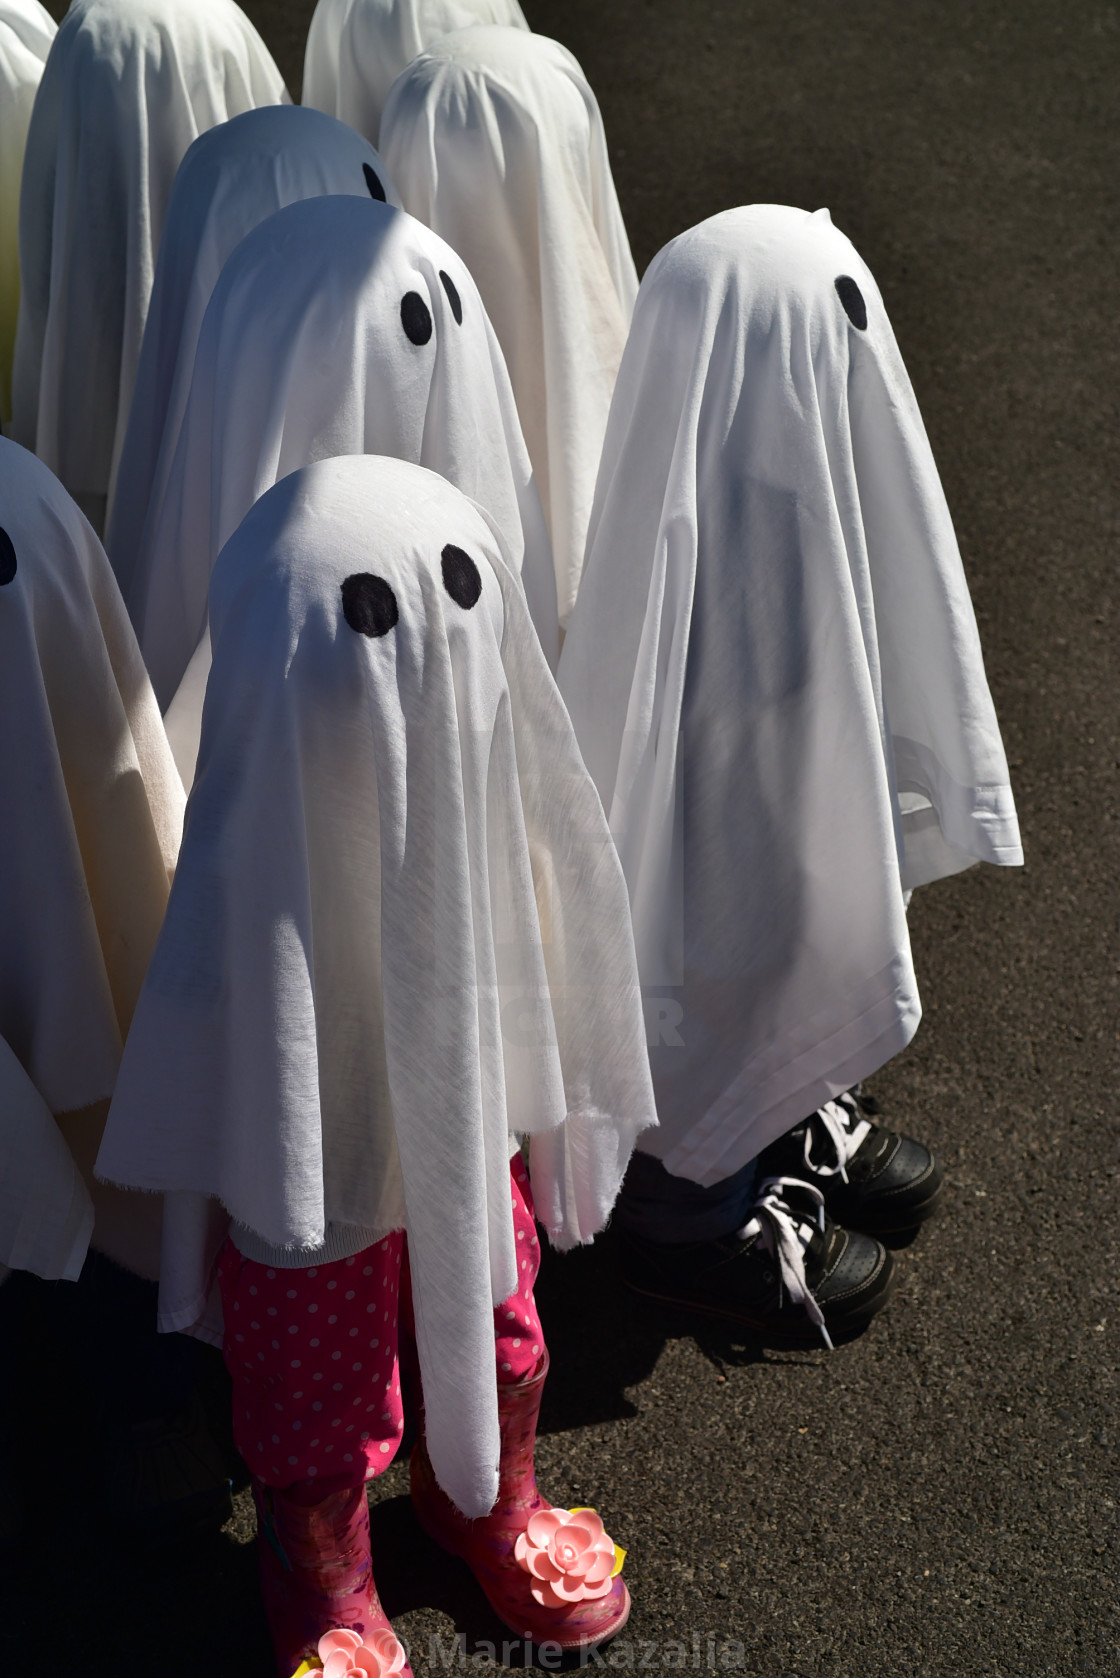 "Halloween ghost figures wearing little shoes!" stock image